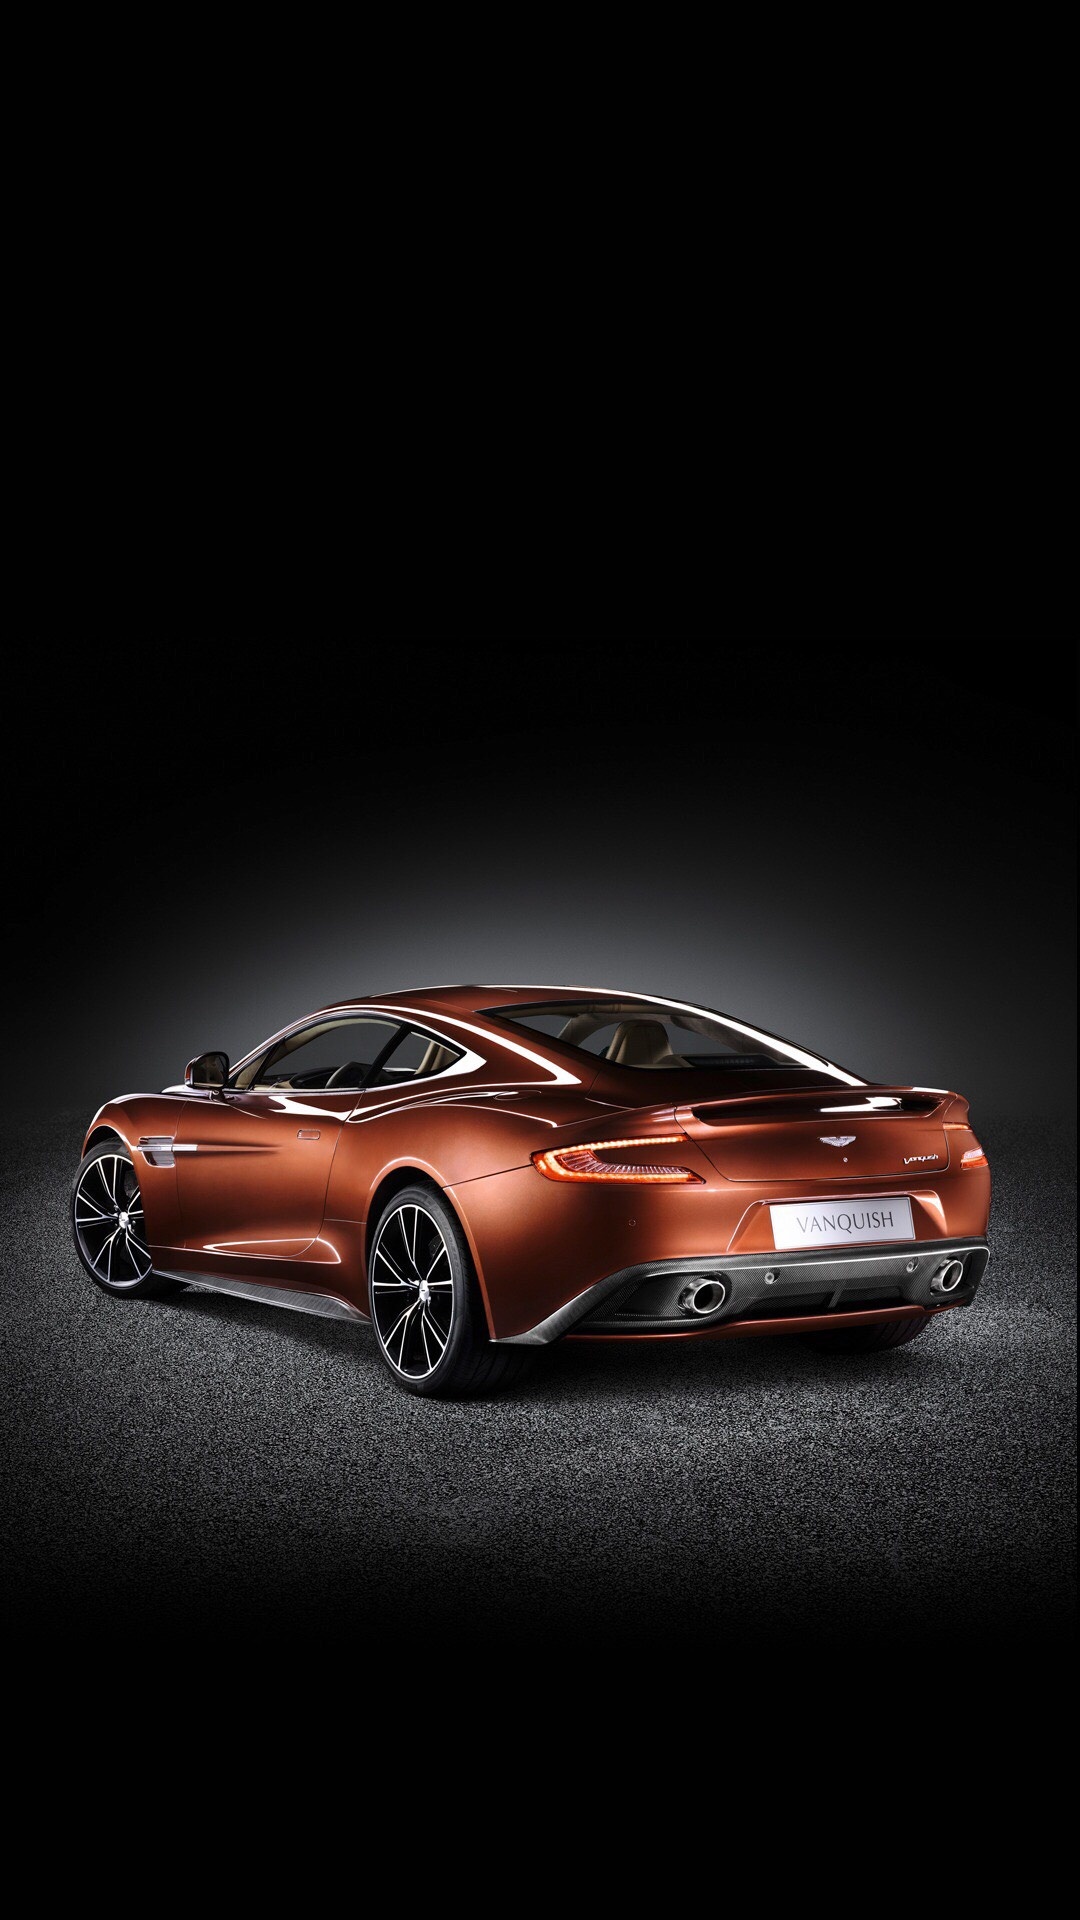 Aston Martin Vanquish, iPhone wallpaper, Luxurious sports car, Aston Martin excellence, 1080x1920 Full HD Phone